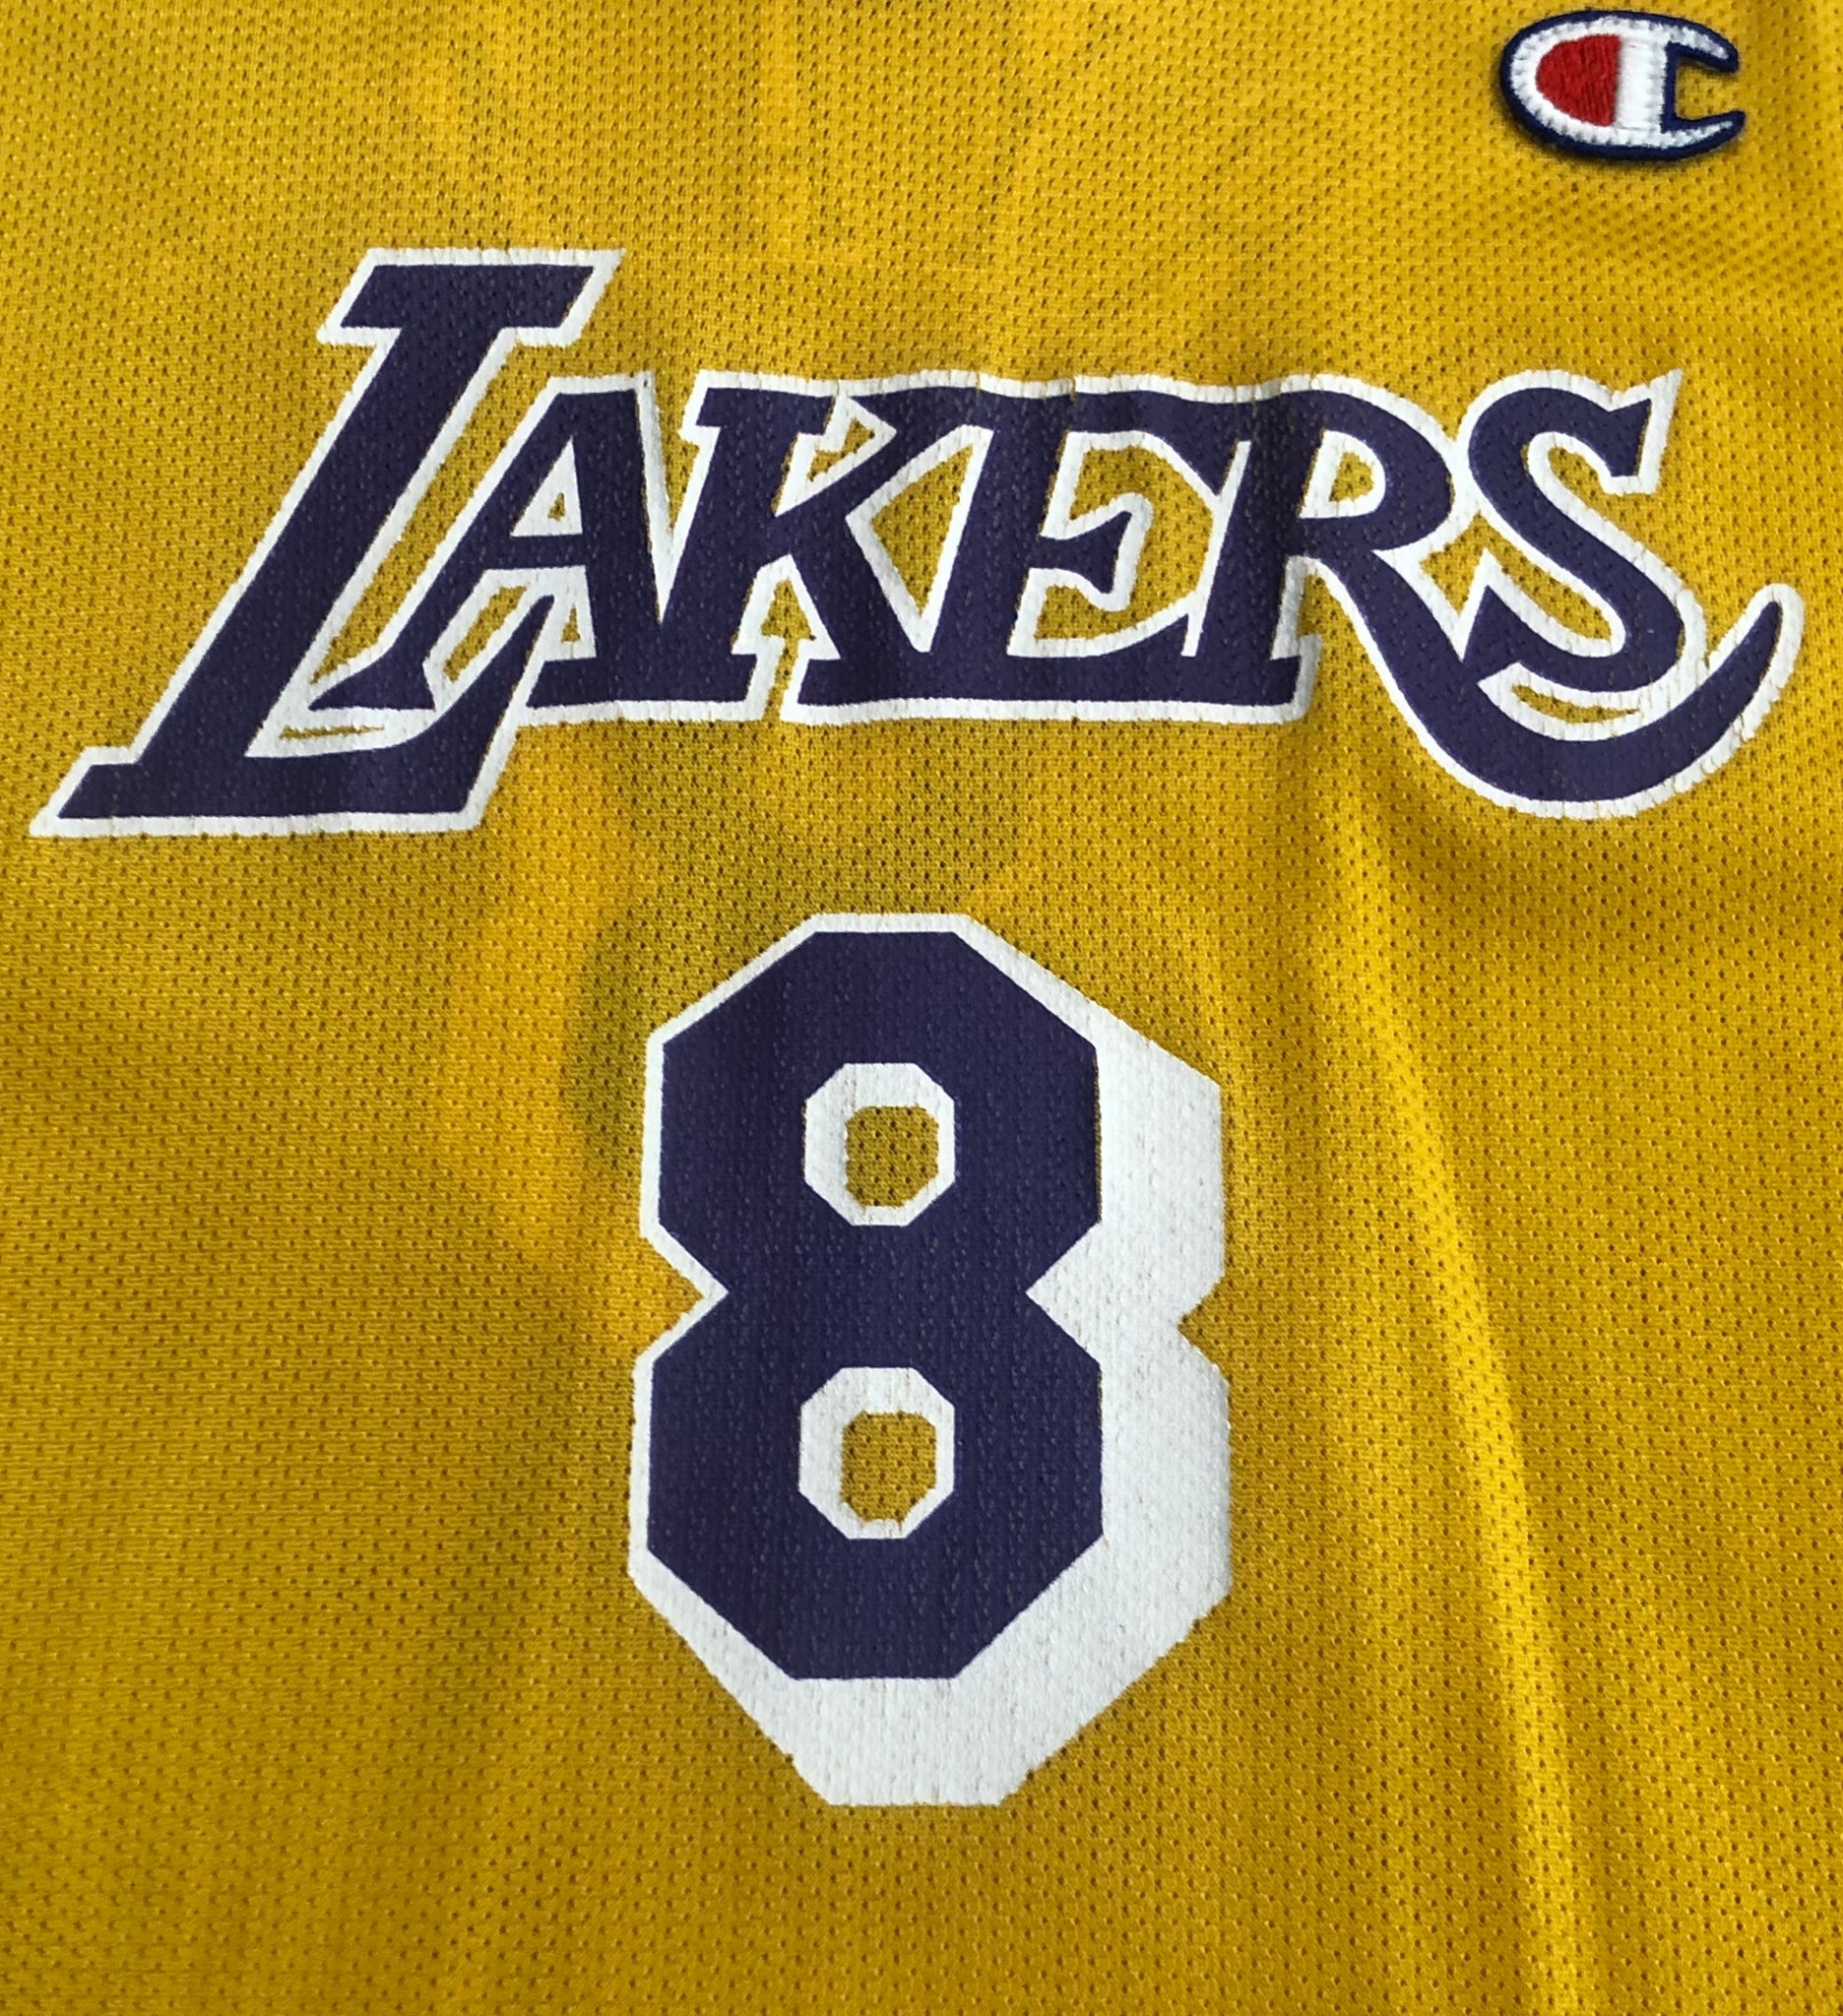 90s Vintage Reebok Kobe Bryant Rookie #8 White Lakers Jersey L